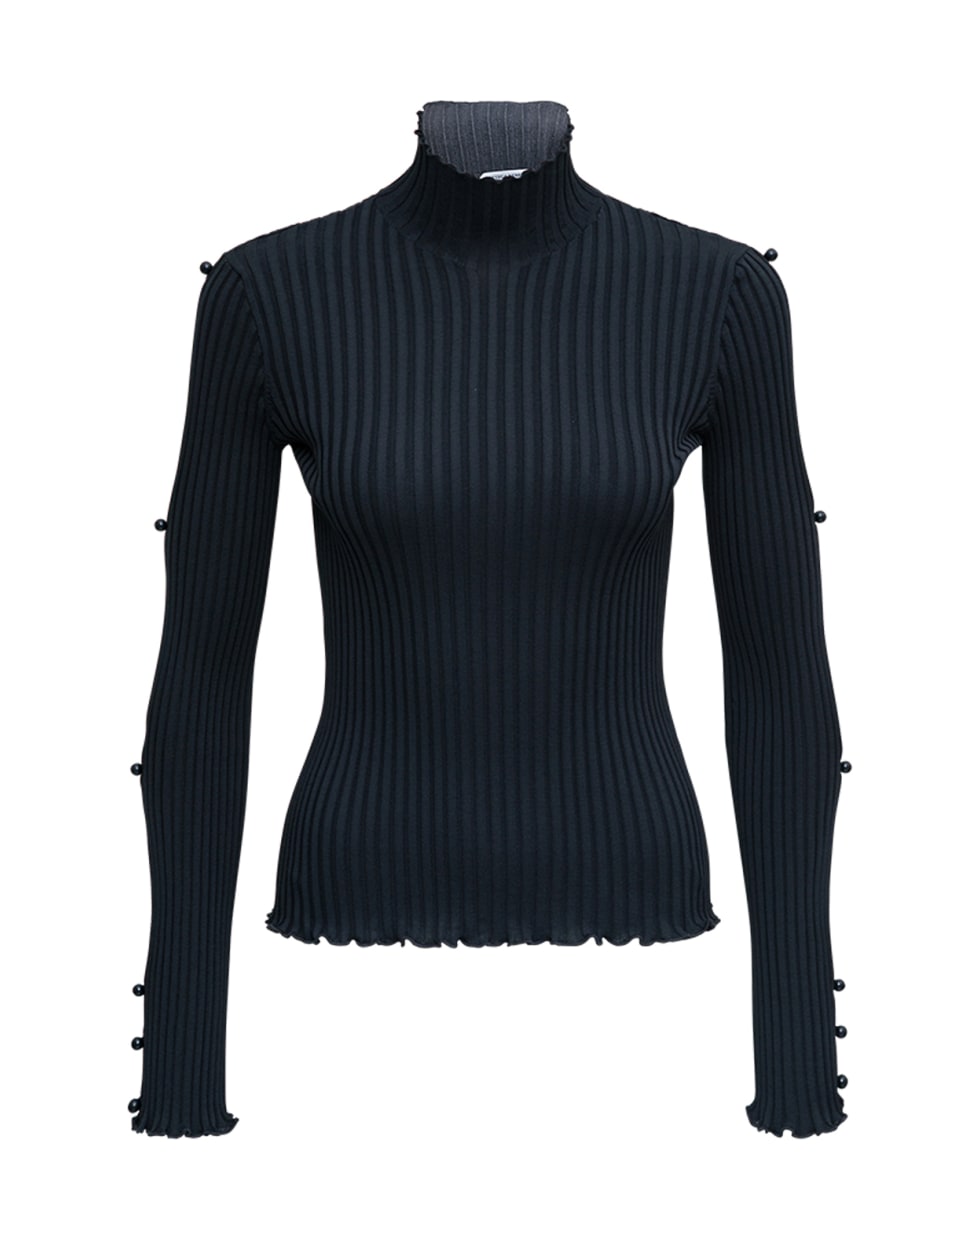 Bottega Veneta Long Sleeve Shirt With Cut Out Details - Black